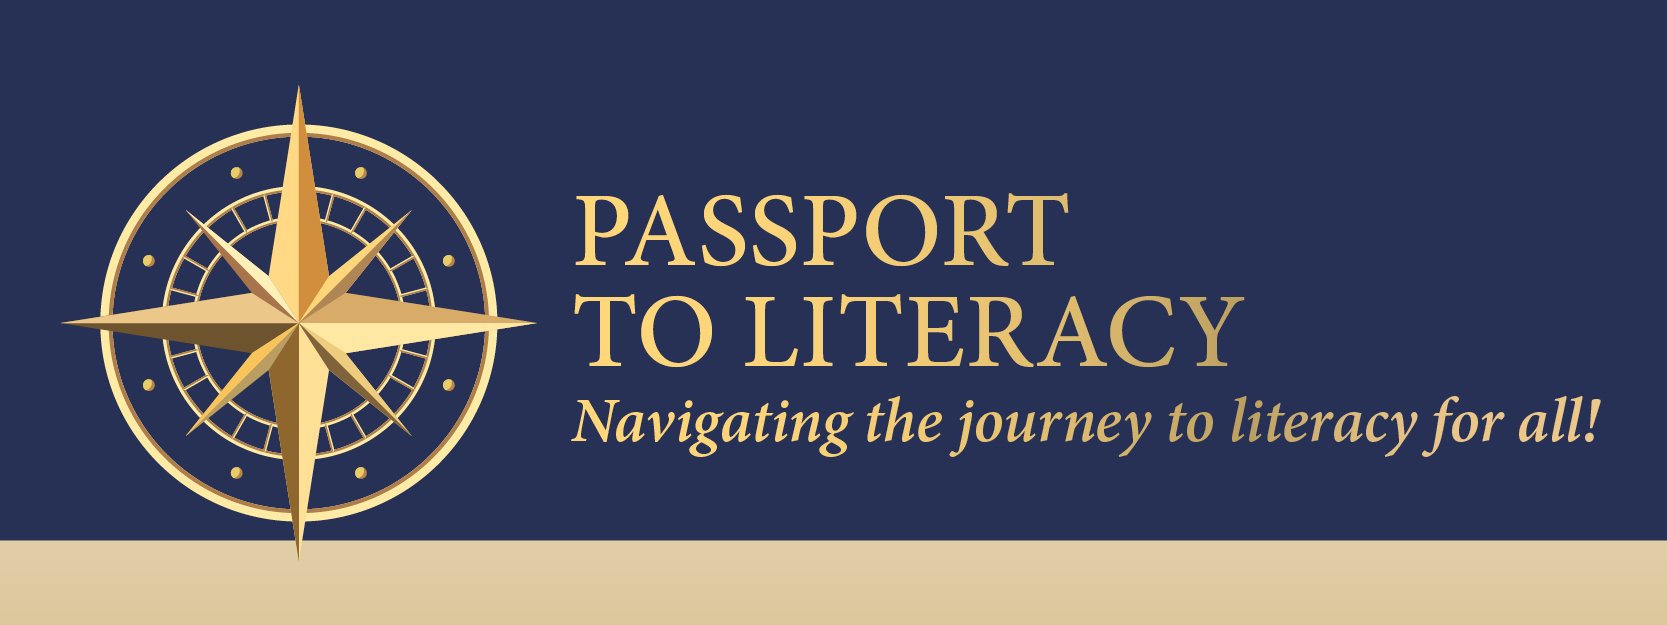 Passport to Literacy - Web Banner